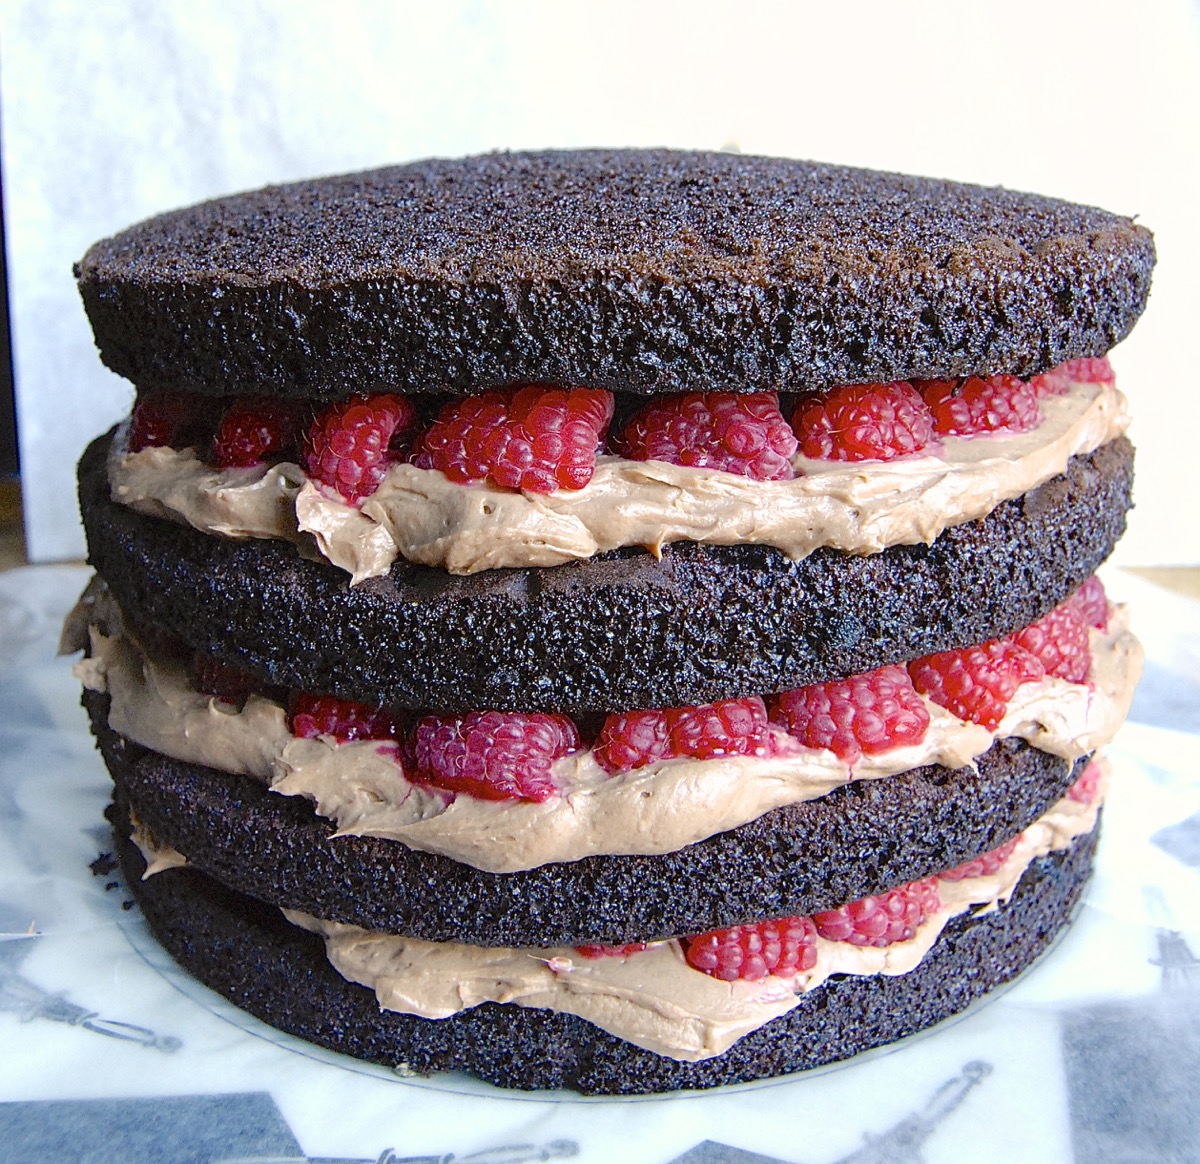 Chocolate Mousse Cake with Raspberries Bakealong via @kingarthurflour